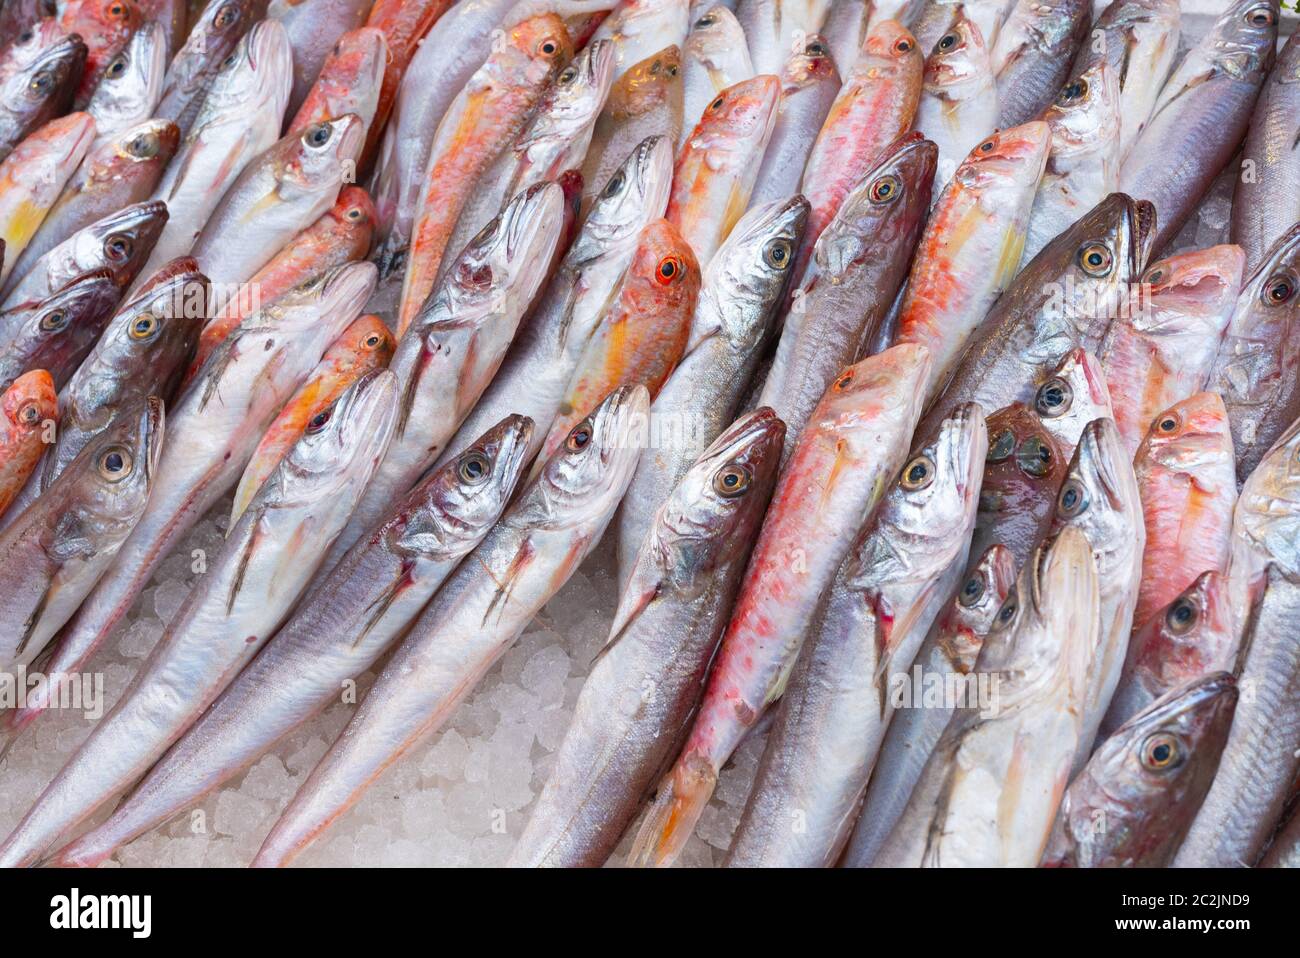 Fish at seamarket Stock Photo